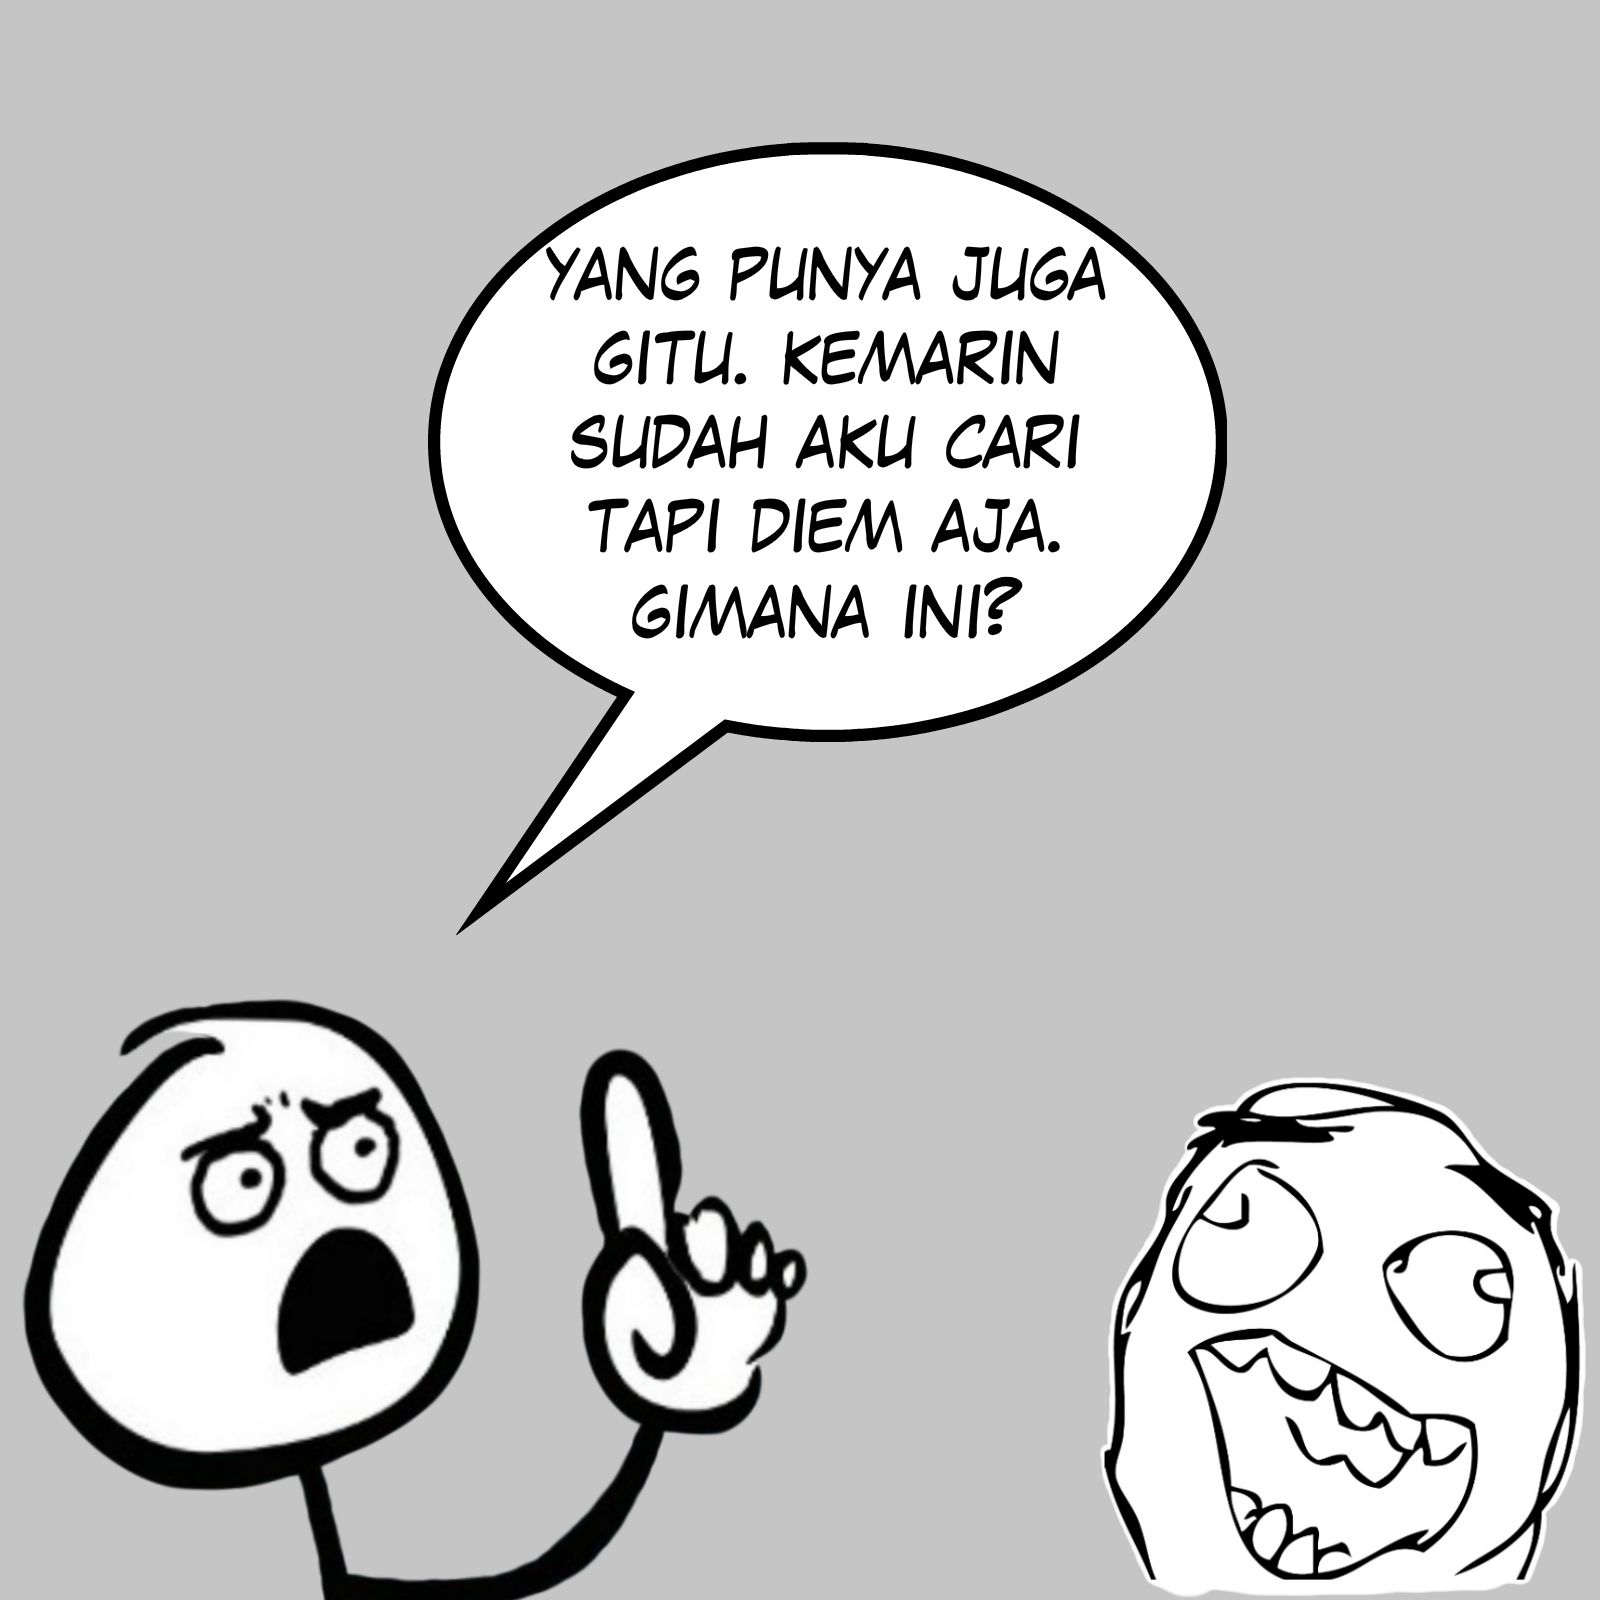 Baca comic strip Indonesia - Sudah - strip.dhocnet.info